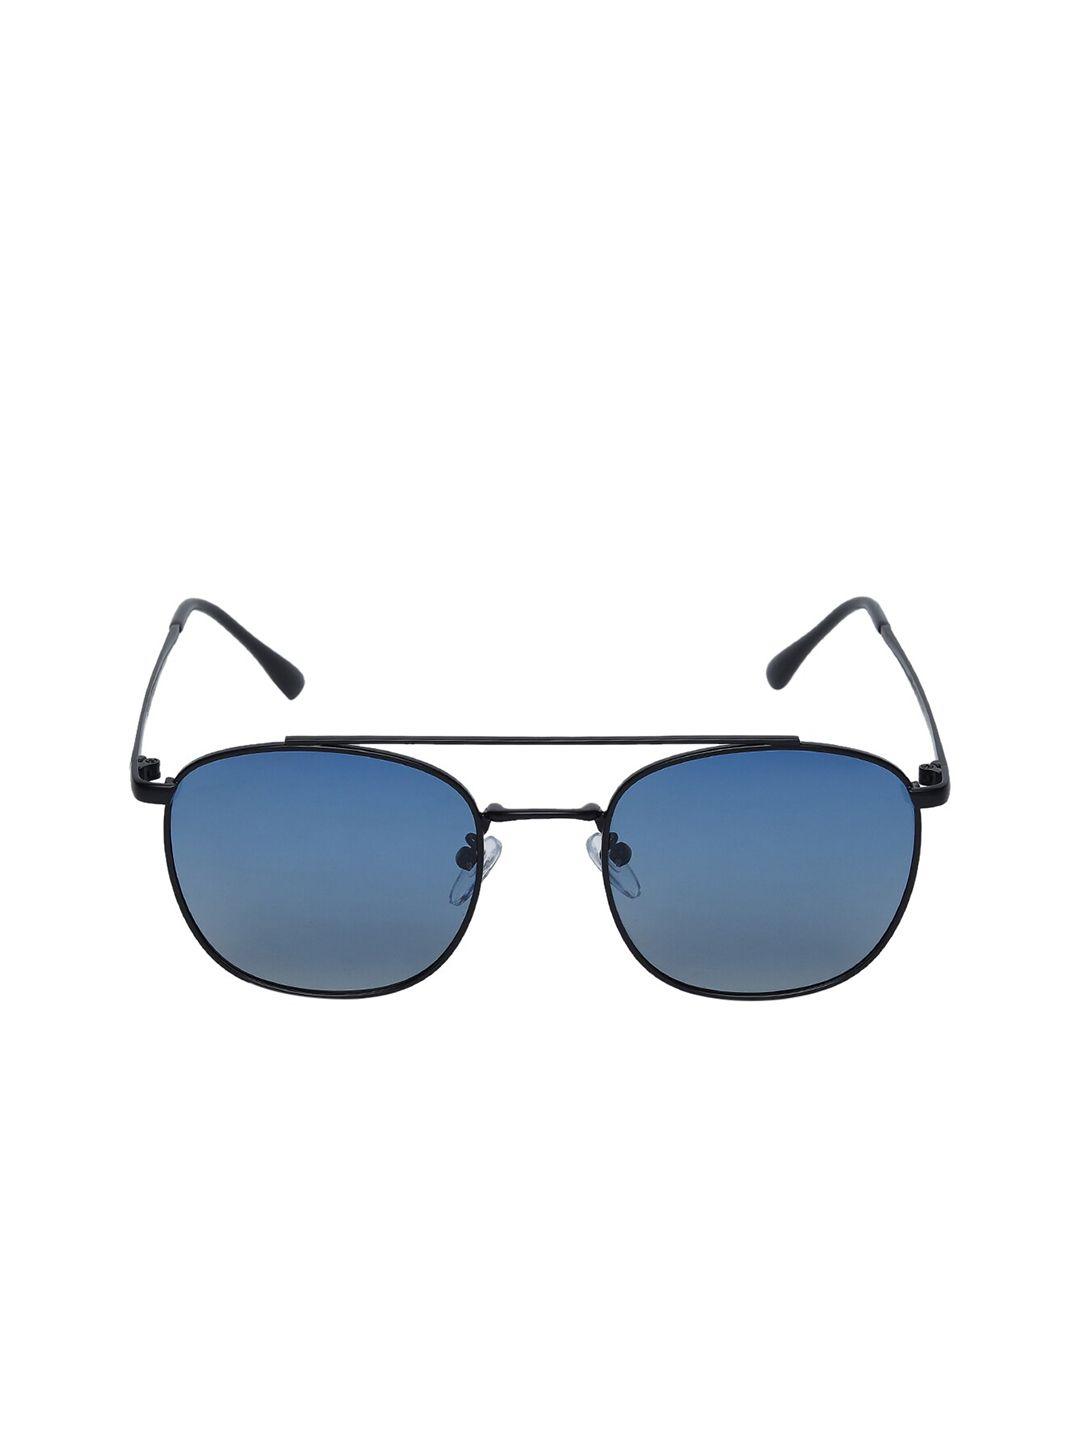 peter jones eyewear unisex blue lens & black round sunglasses - po730bl